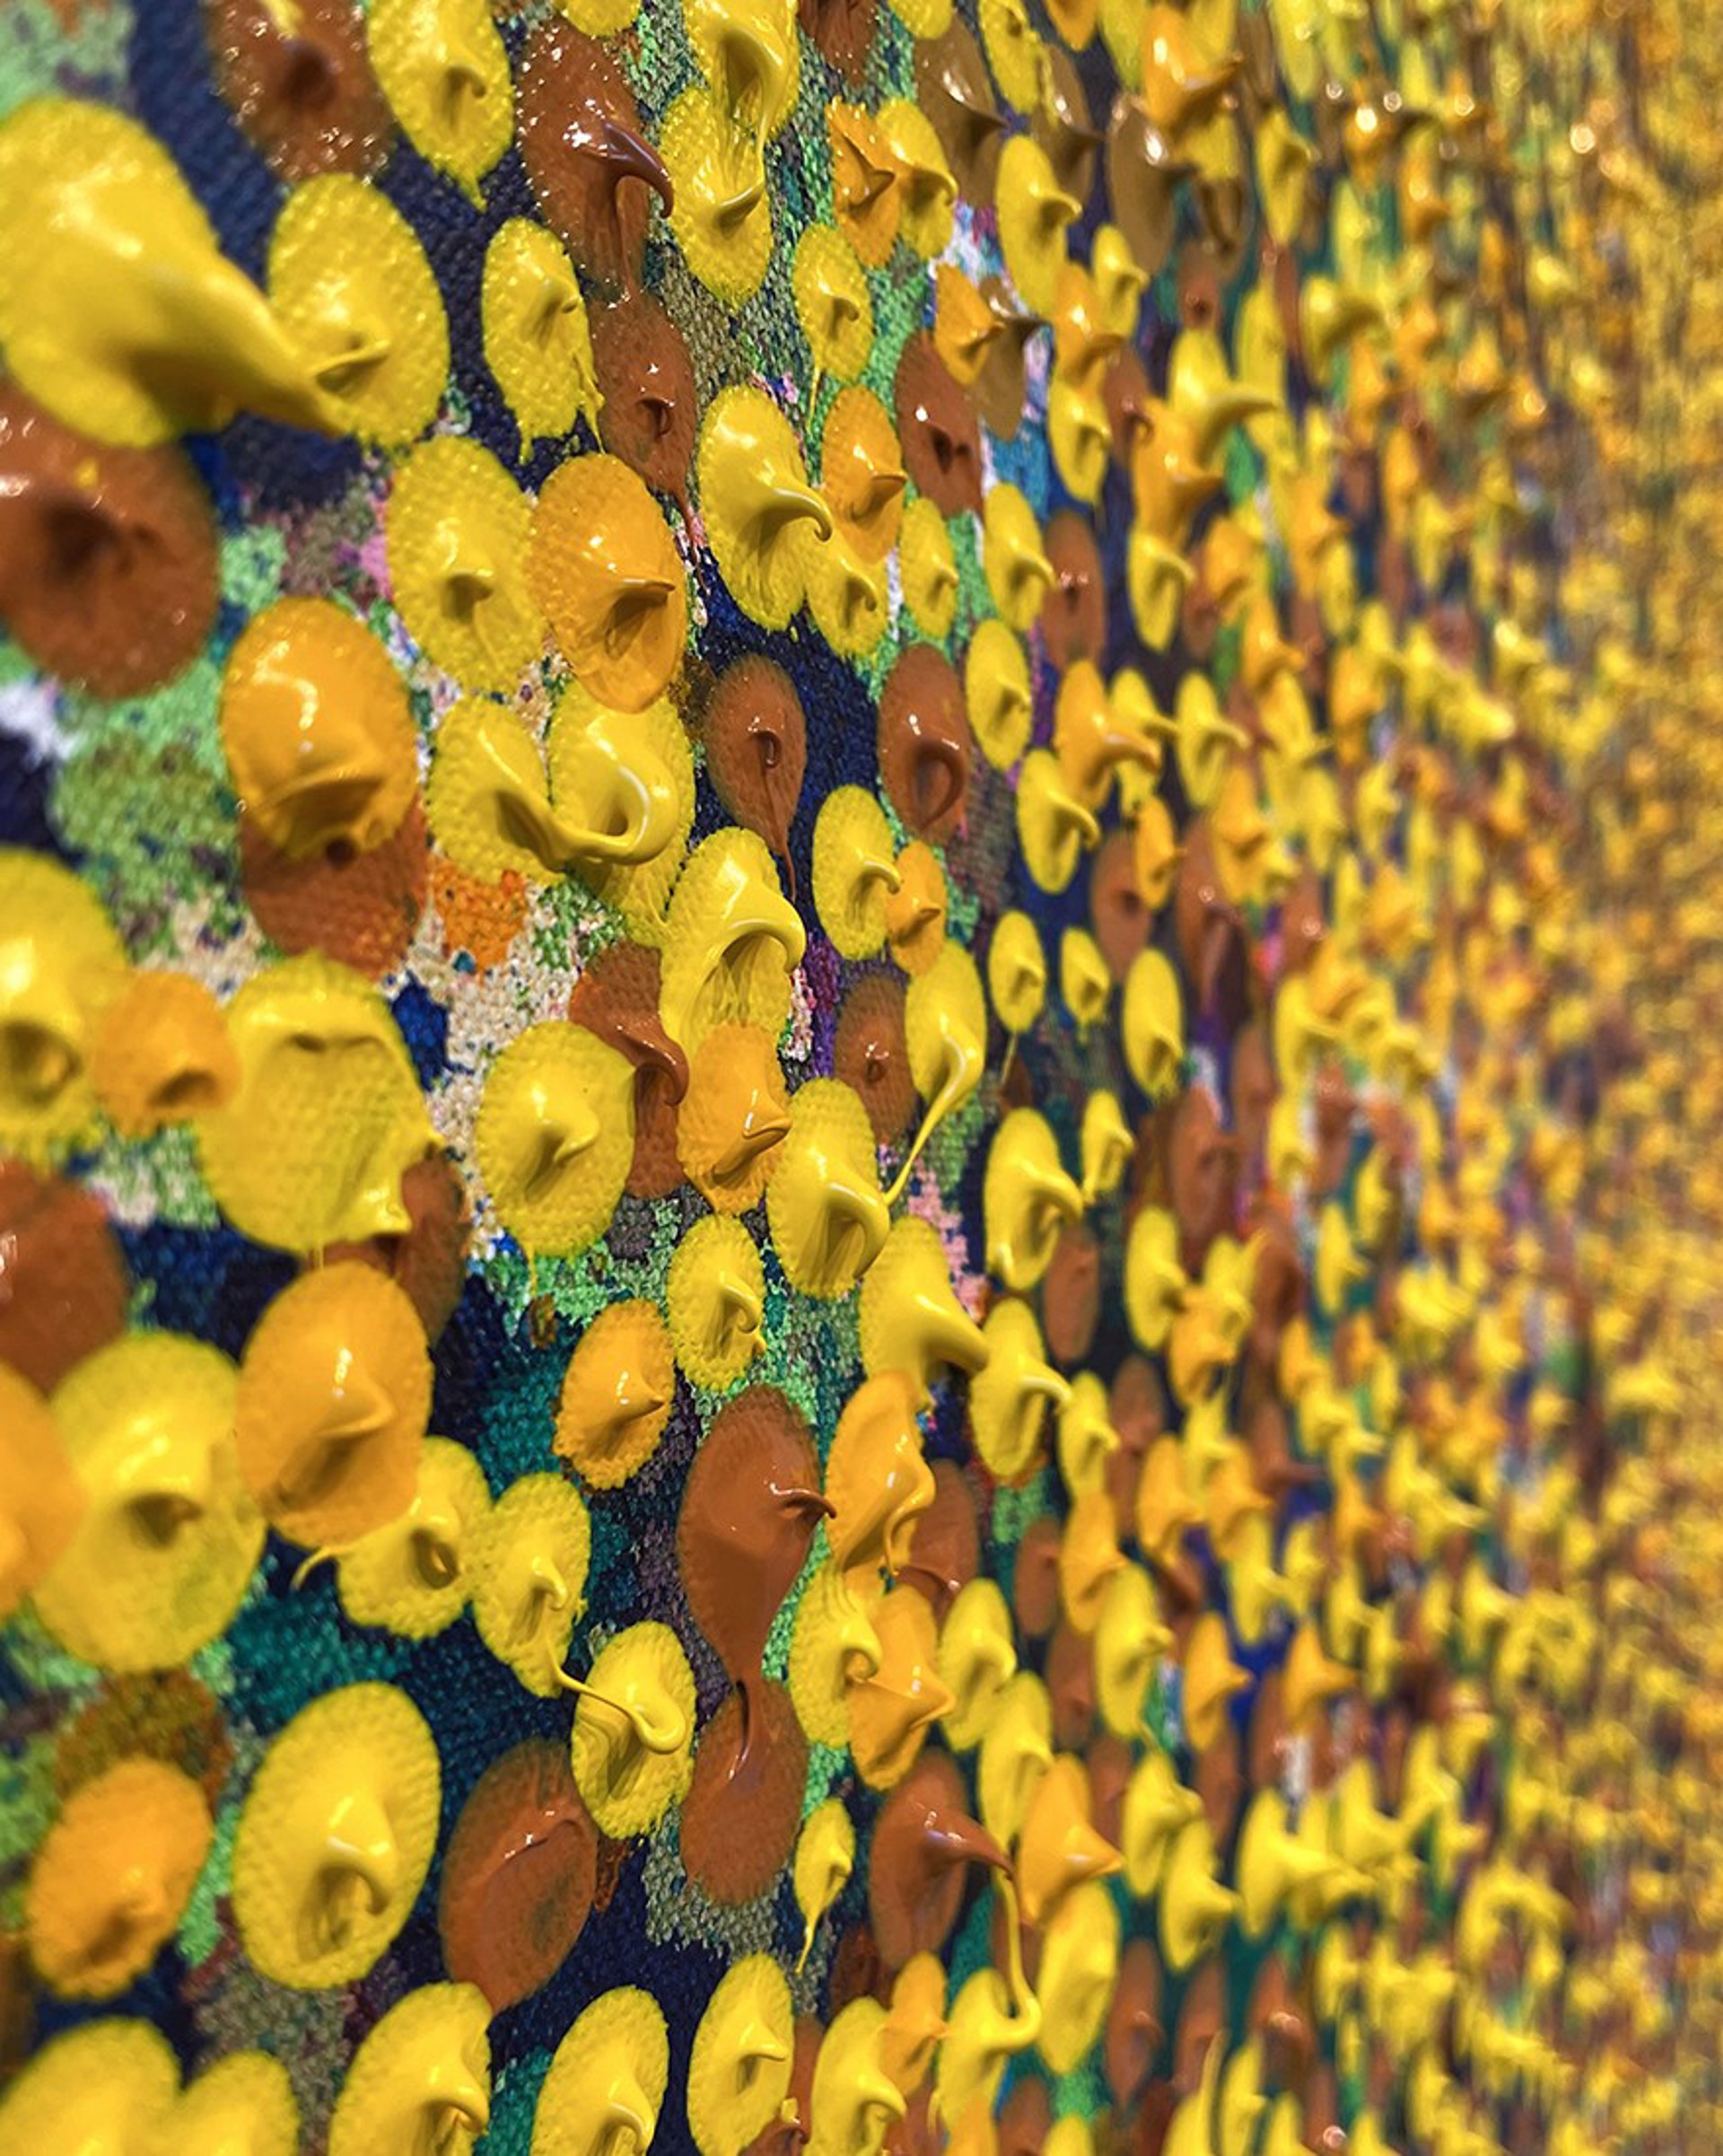 Yellows in Autumn by Marcio Diaz